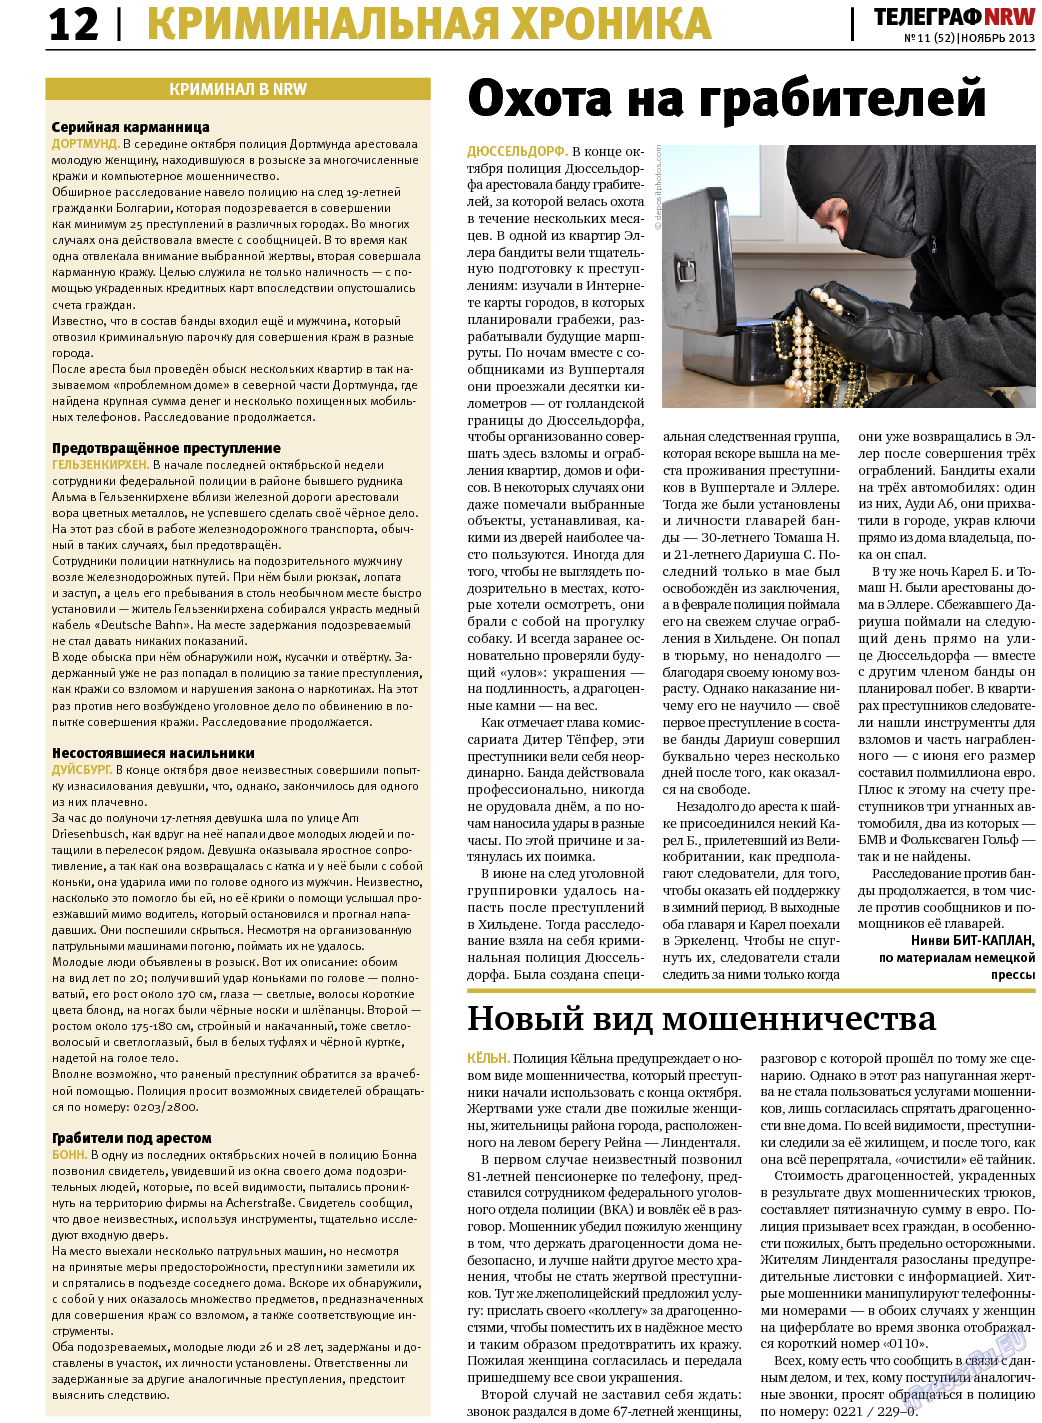 Телеграф NRW, газета. 2013 №11 стр.12